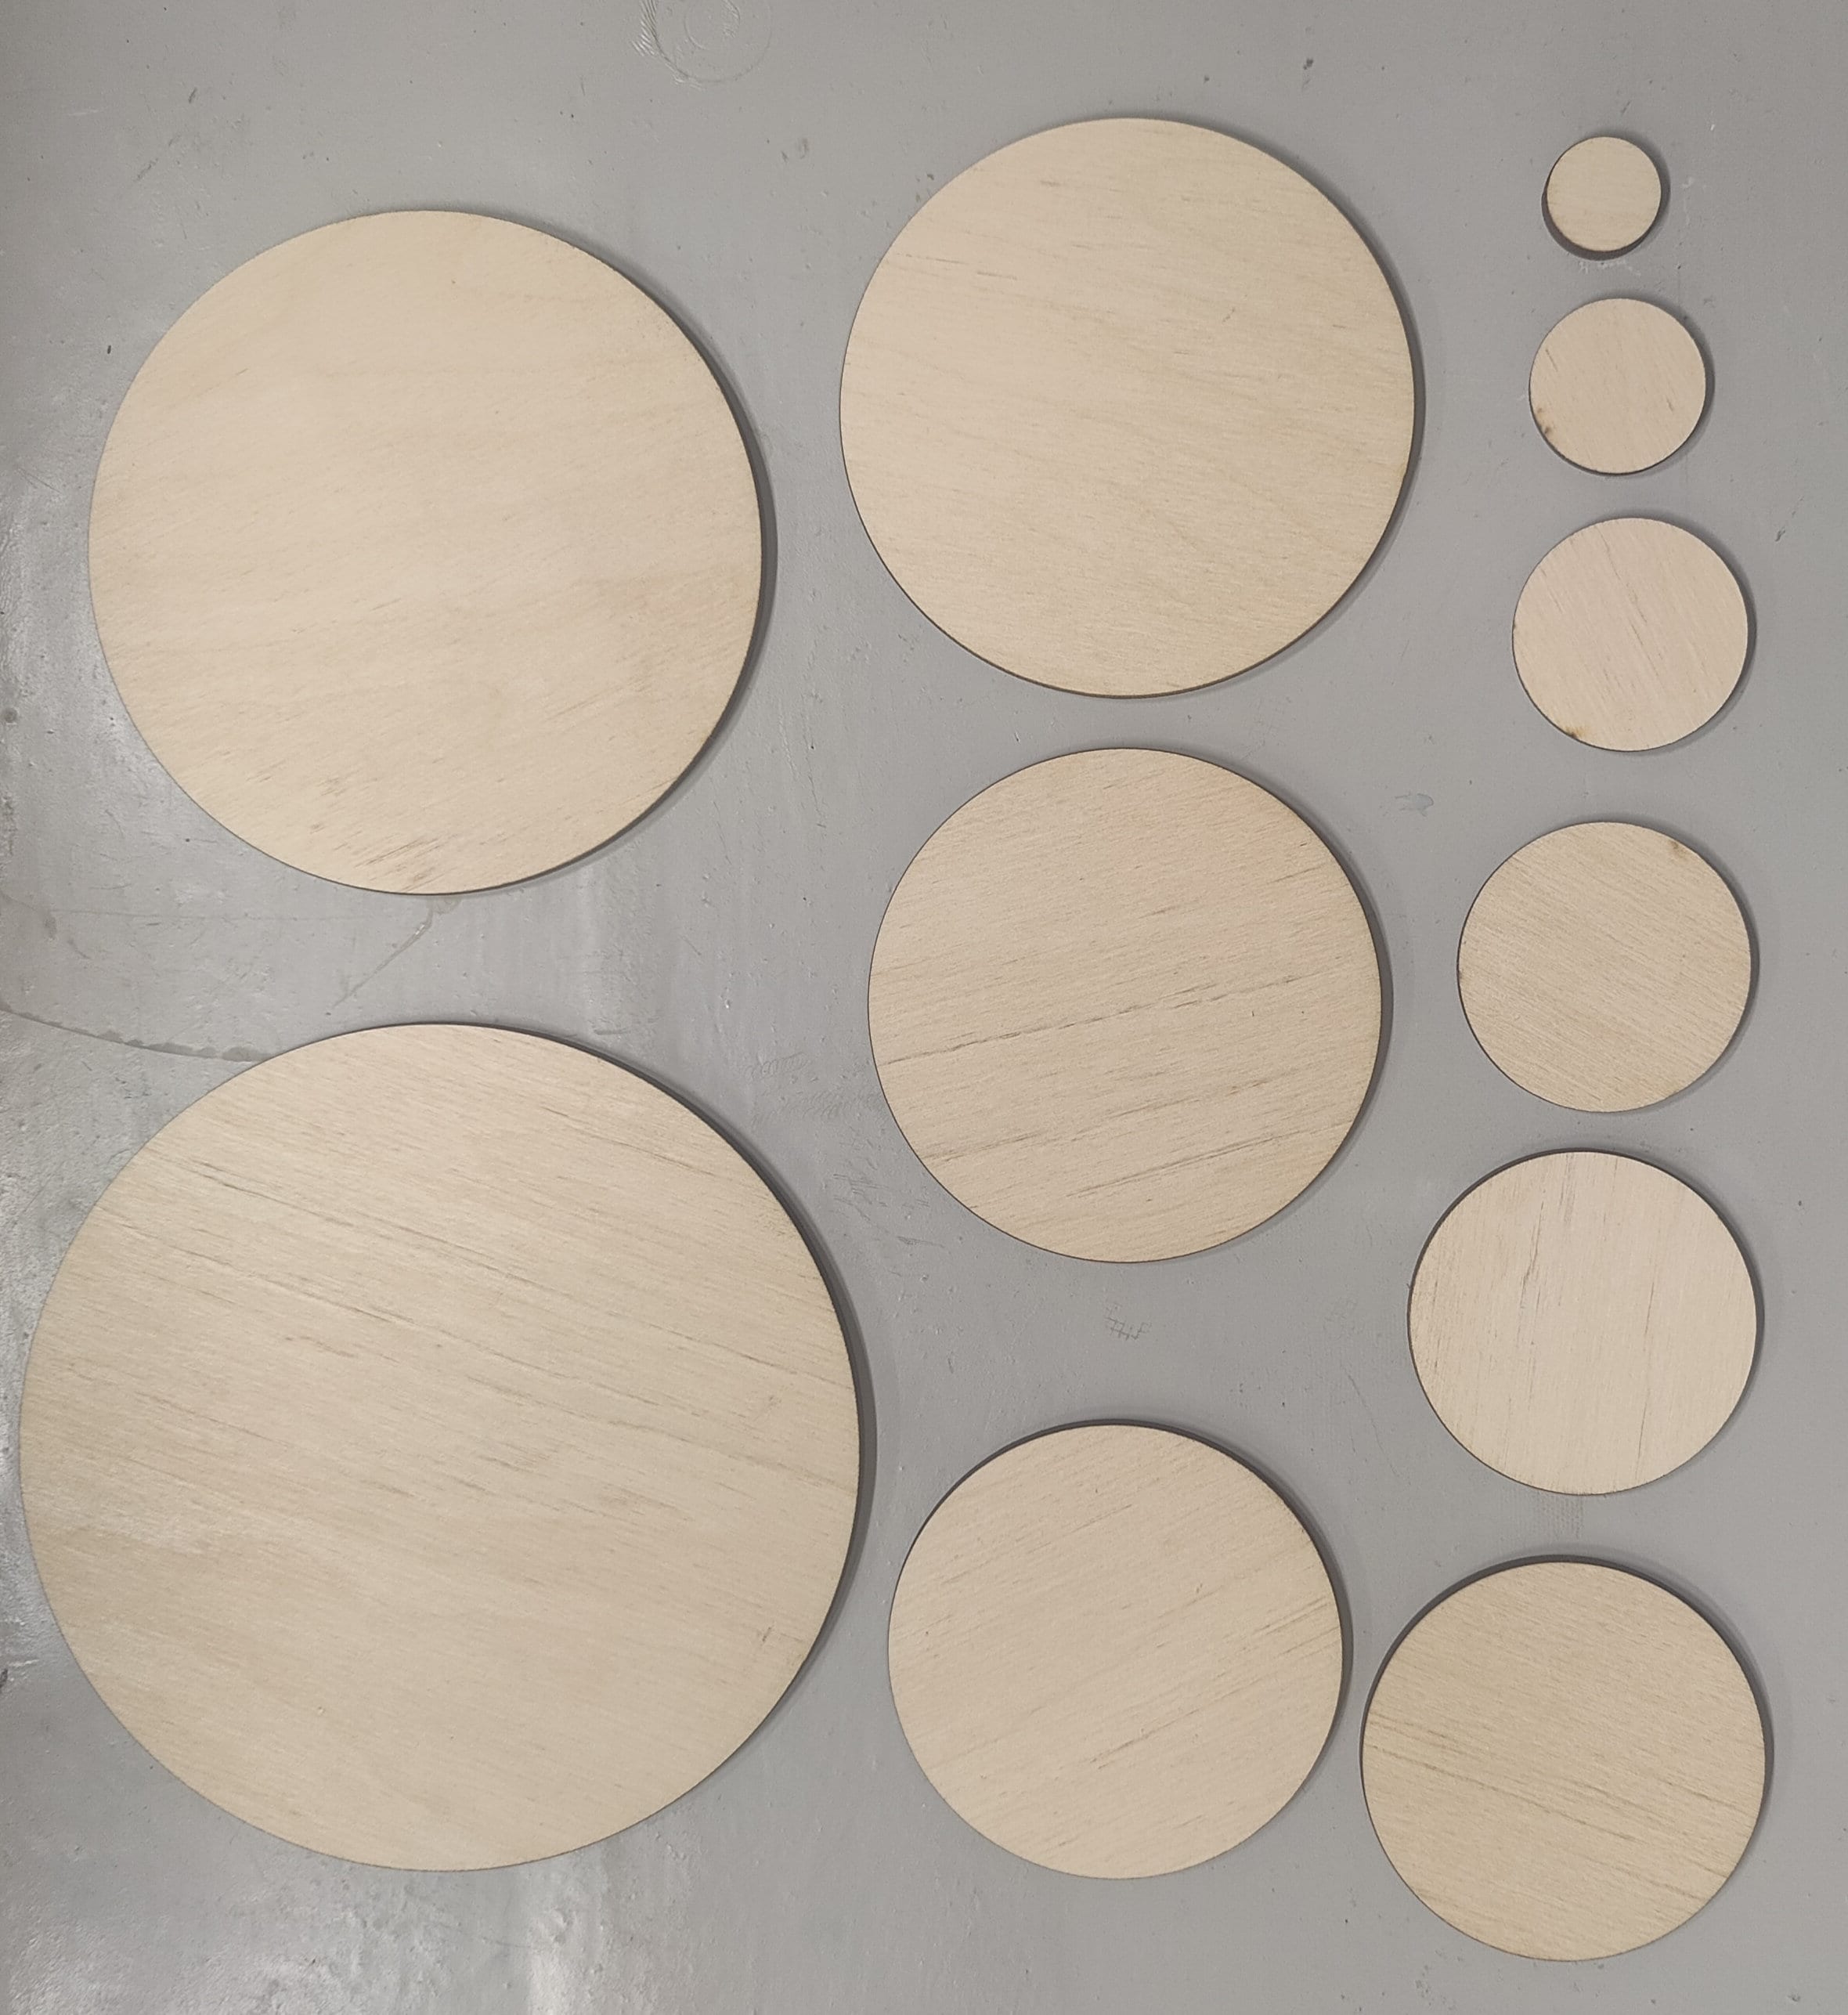 10 Unfinished Wooden Circles Laser Cut, Wood Circle Cutout Craft